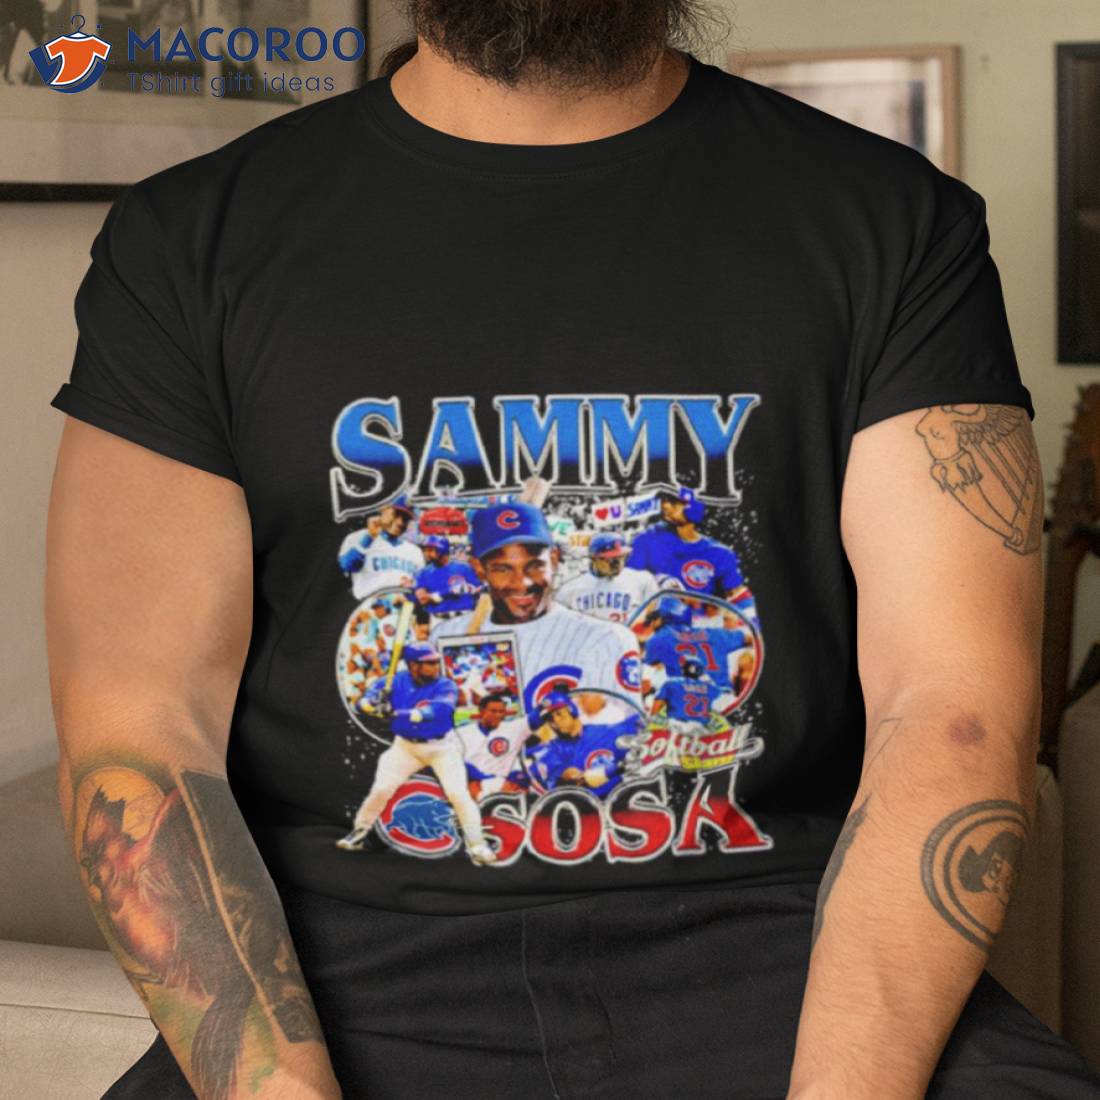 Sammy Sosa Chicago Cubs Mlb Shirt